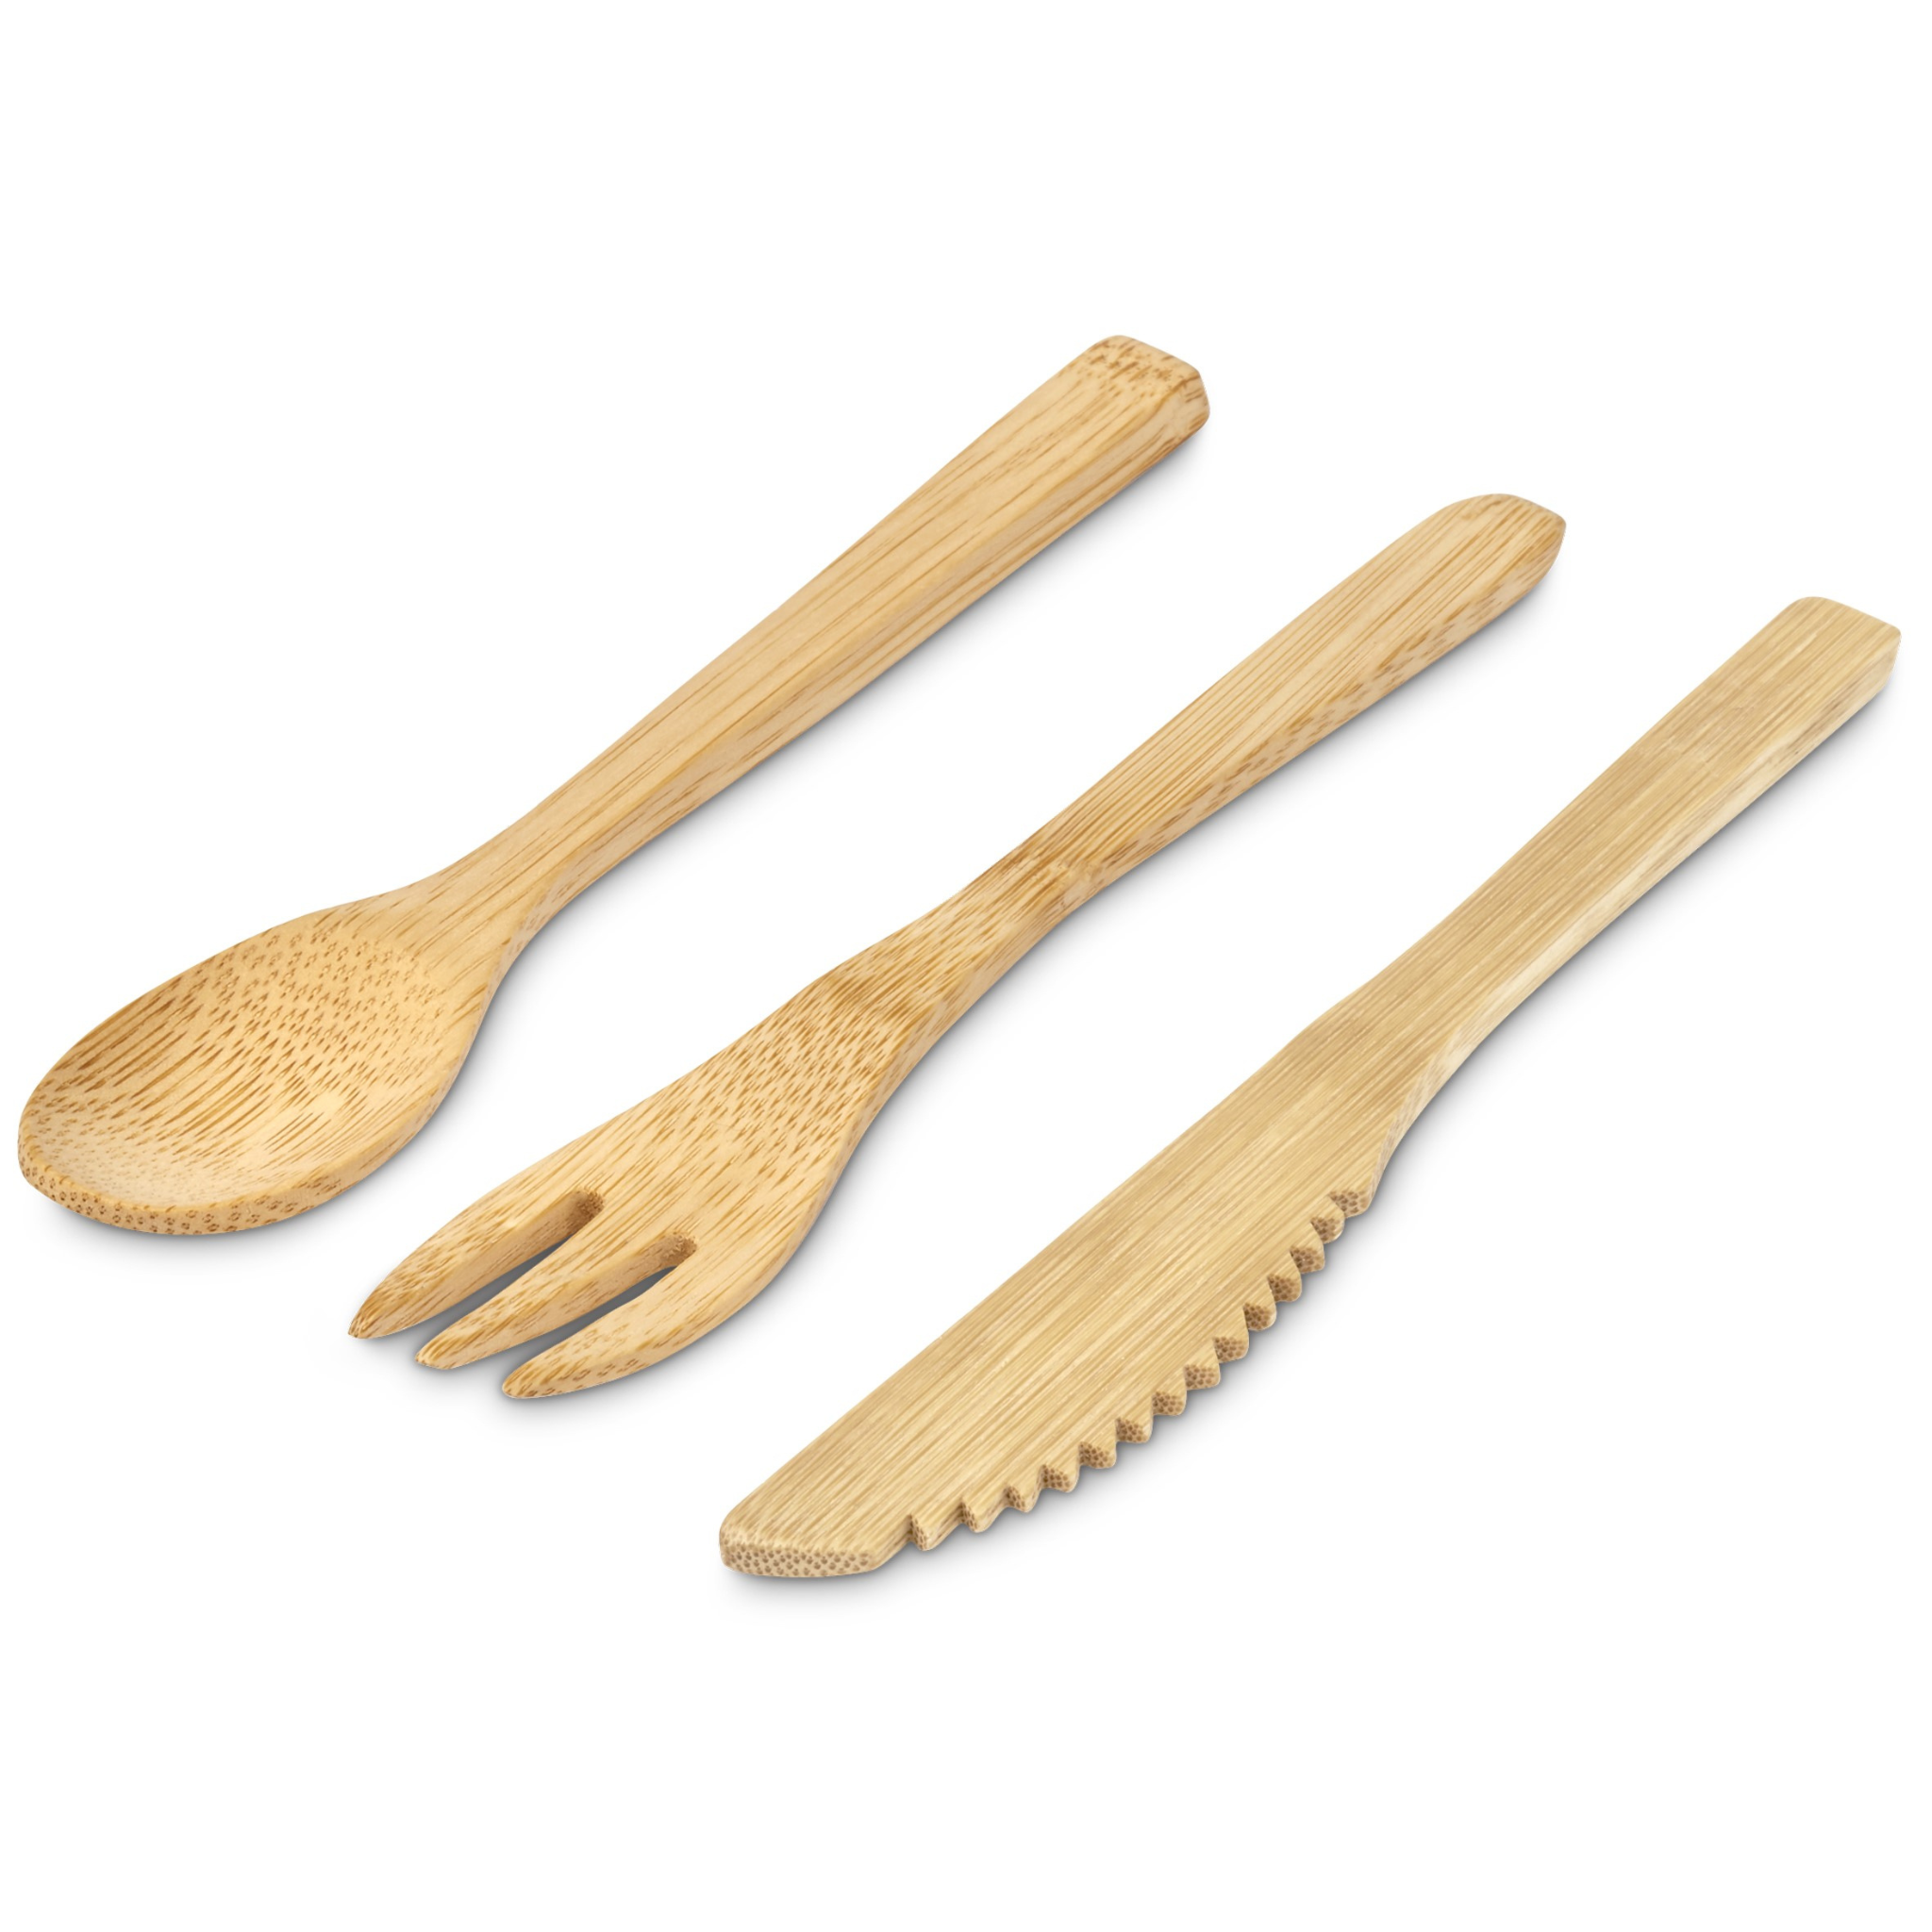 Bamboo cutlery set